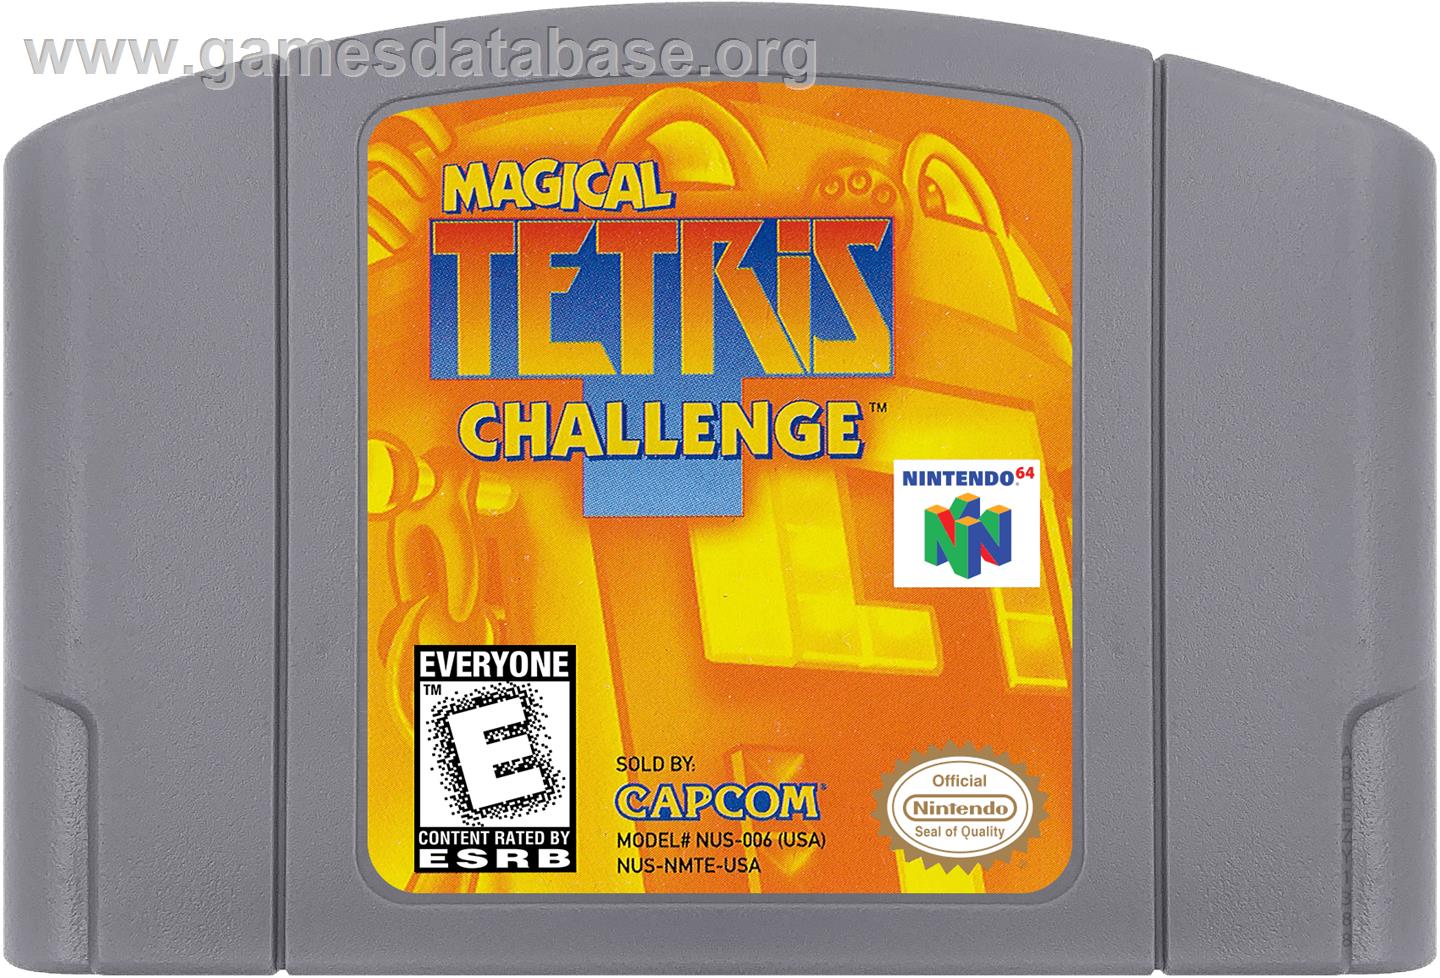 Magical Tetris Challenge - Nintendo N64 - Artwork - Cartridge